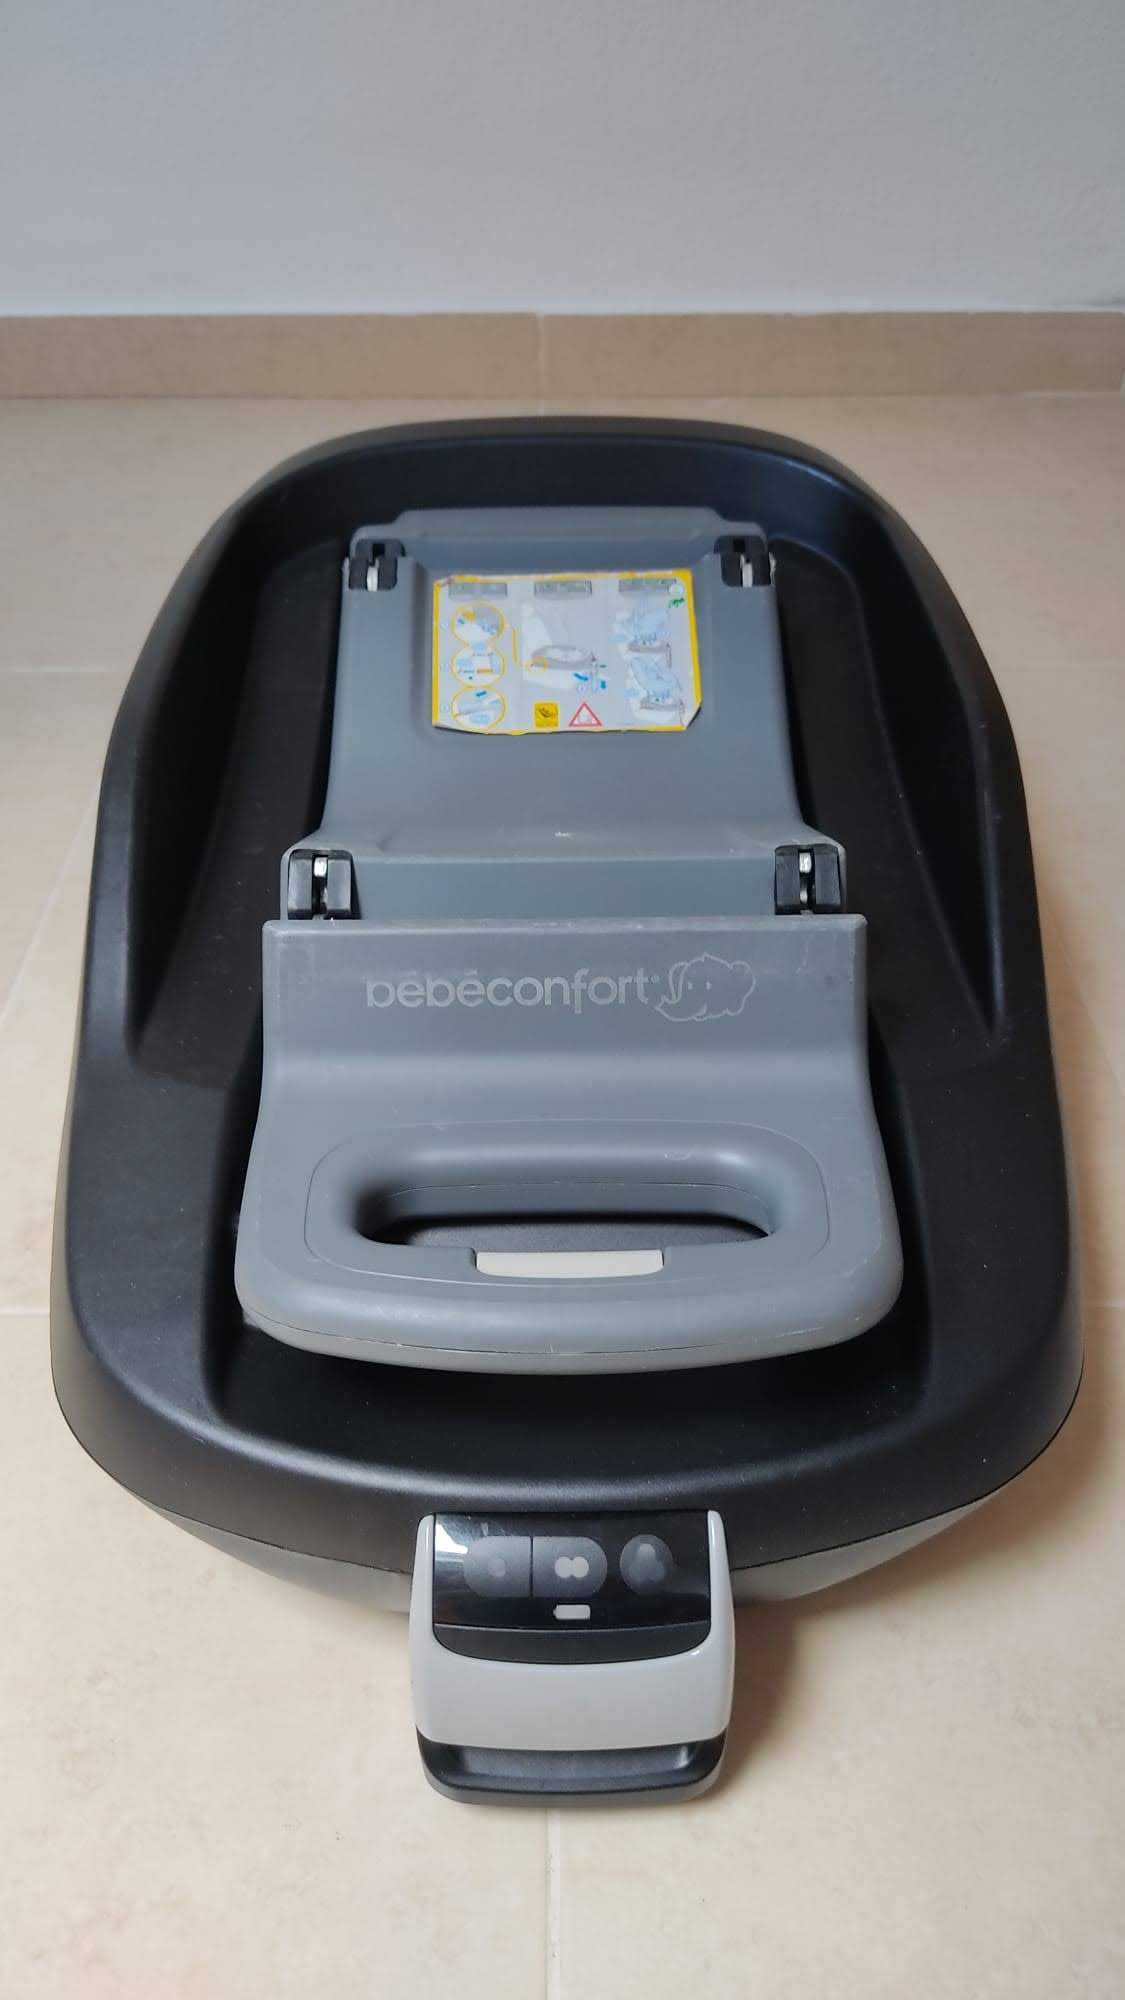 Cadeira Pearl BebeConfort com Base isofix rebatível